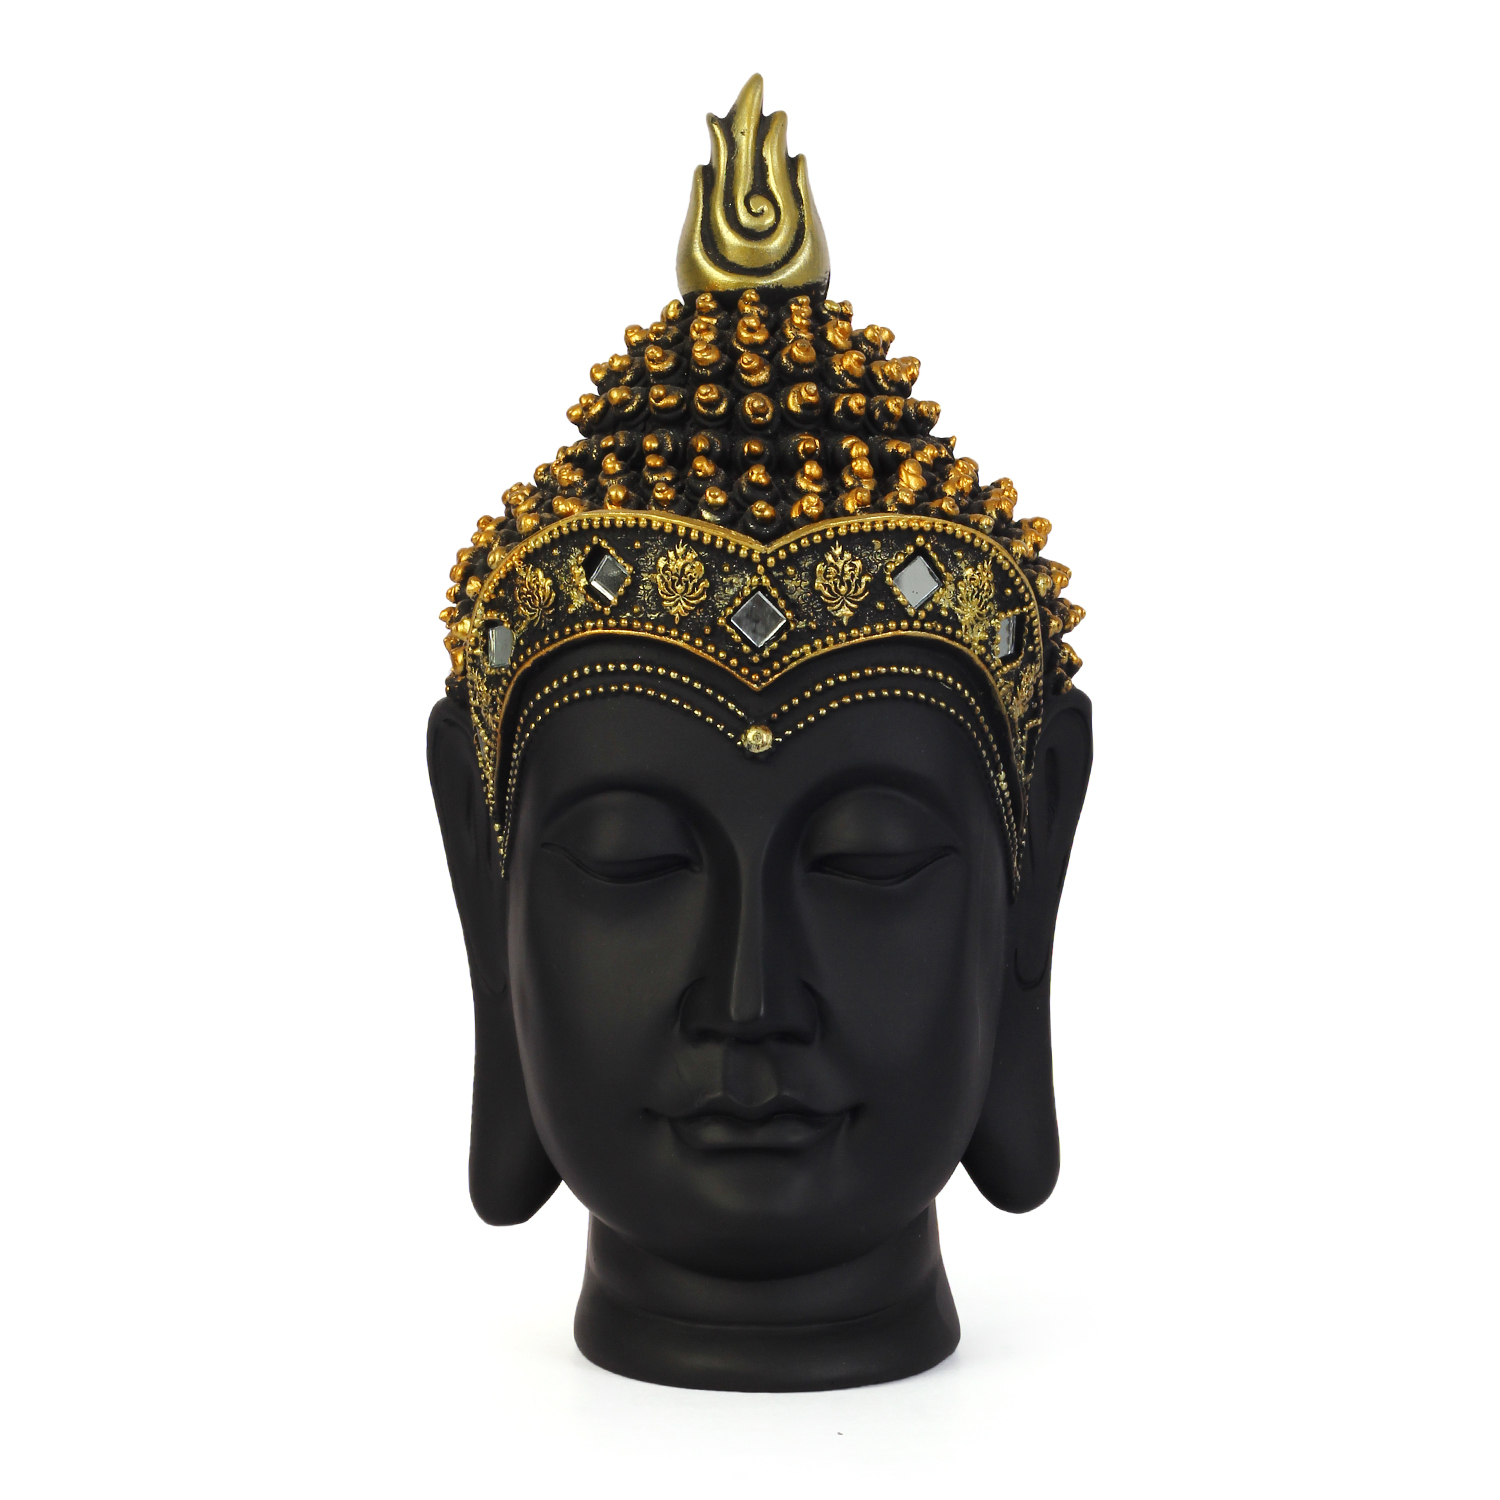 ORKA HOME Polyresin Buddha Head Figurine - Black And Golden  